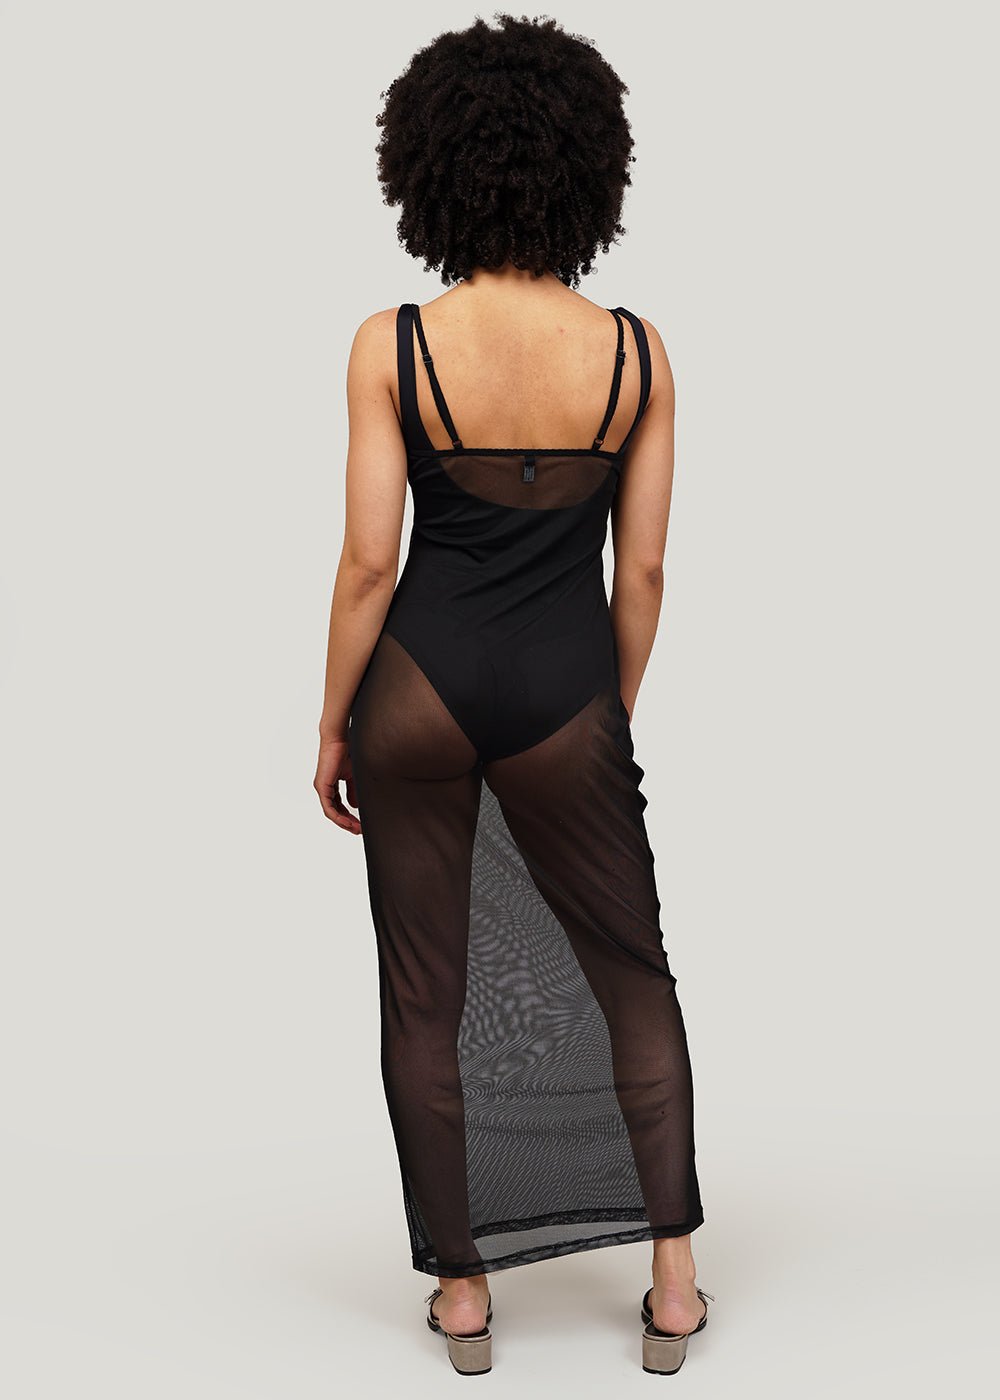 Overlay Slip Dress in Black by KYE INTIMATES – New Classics Studios